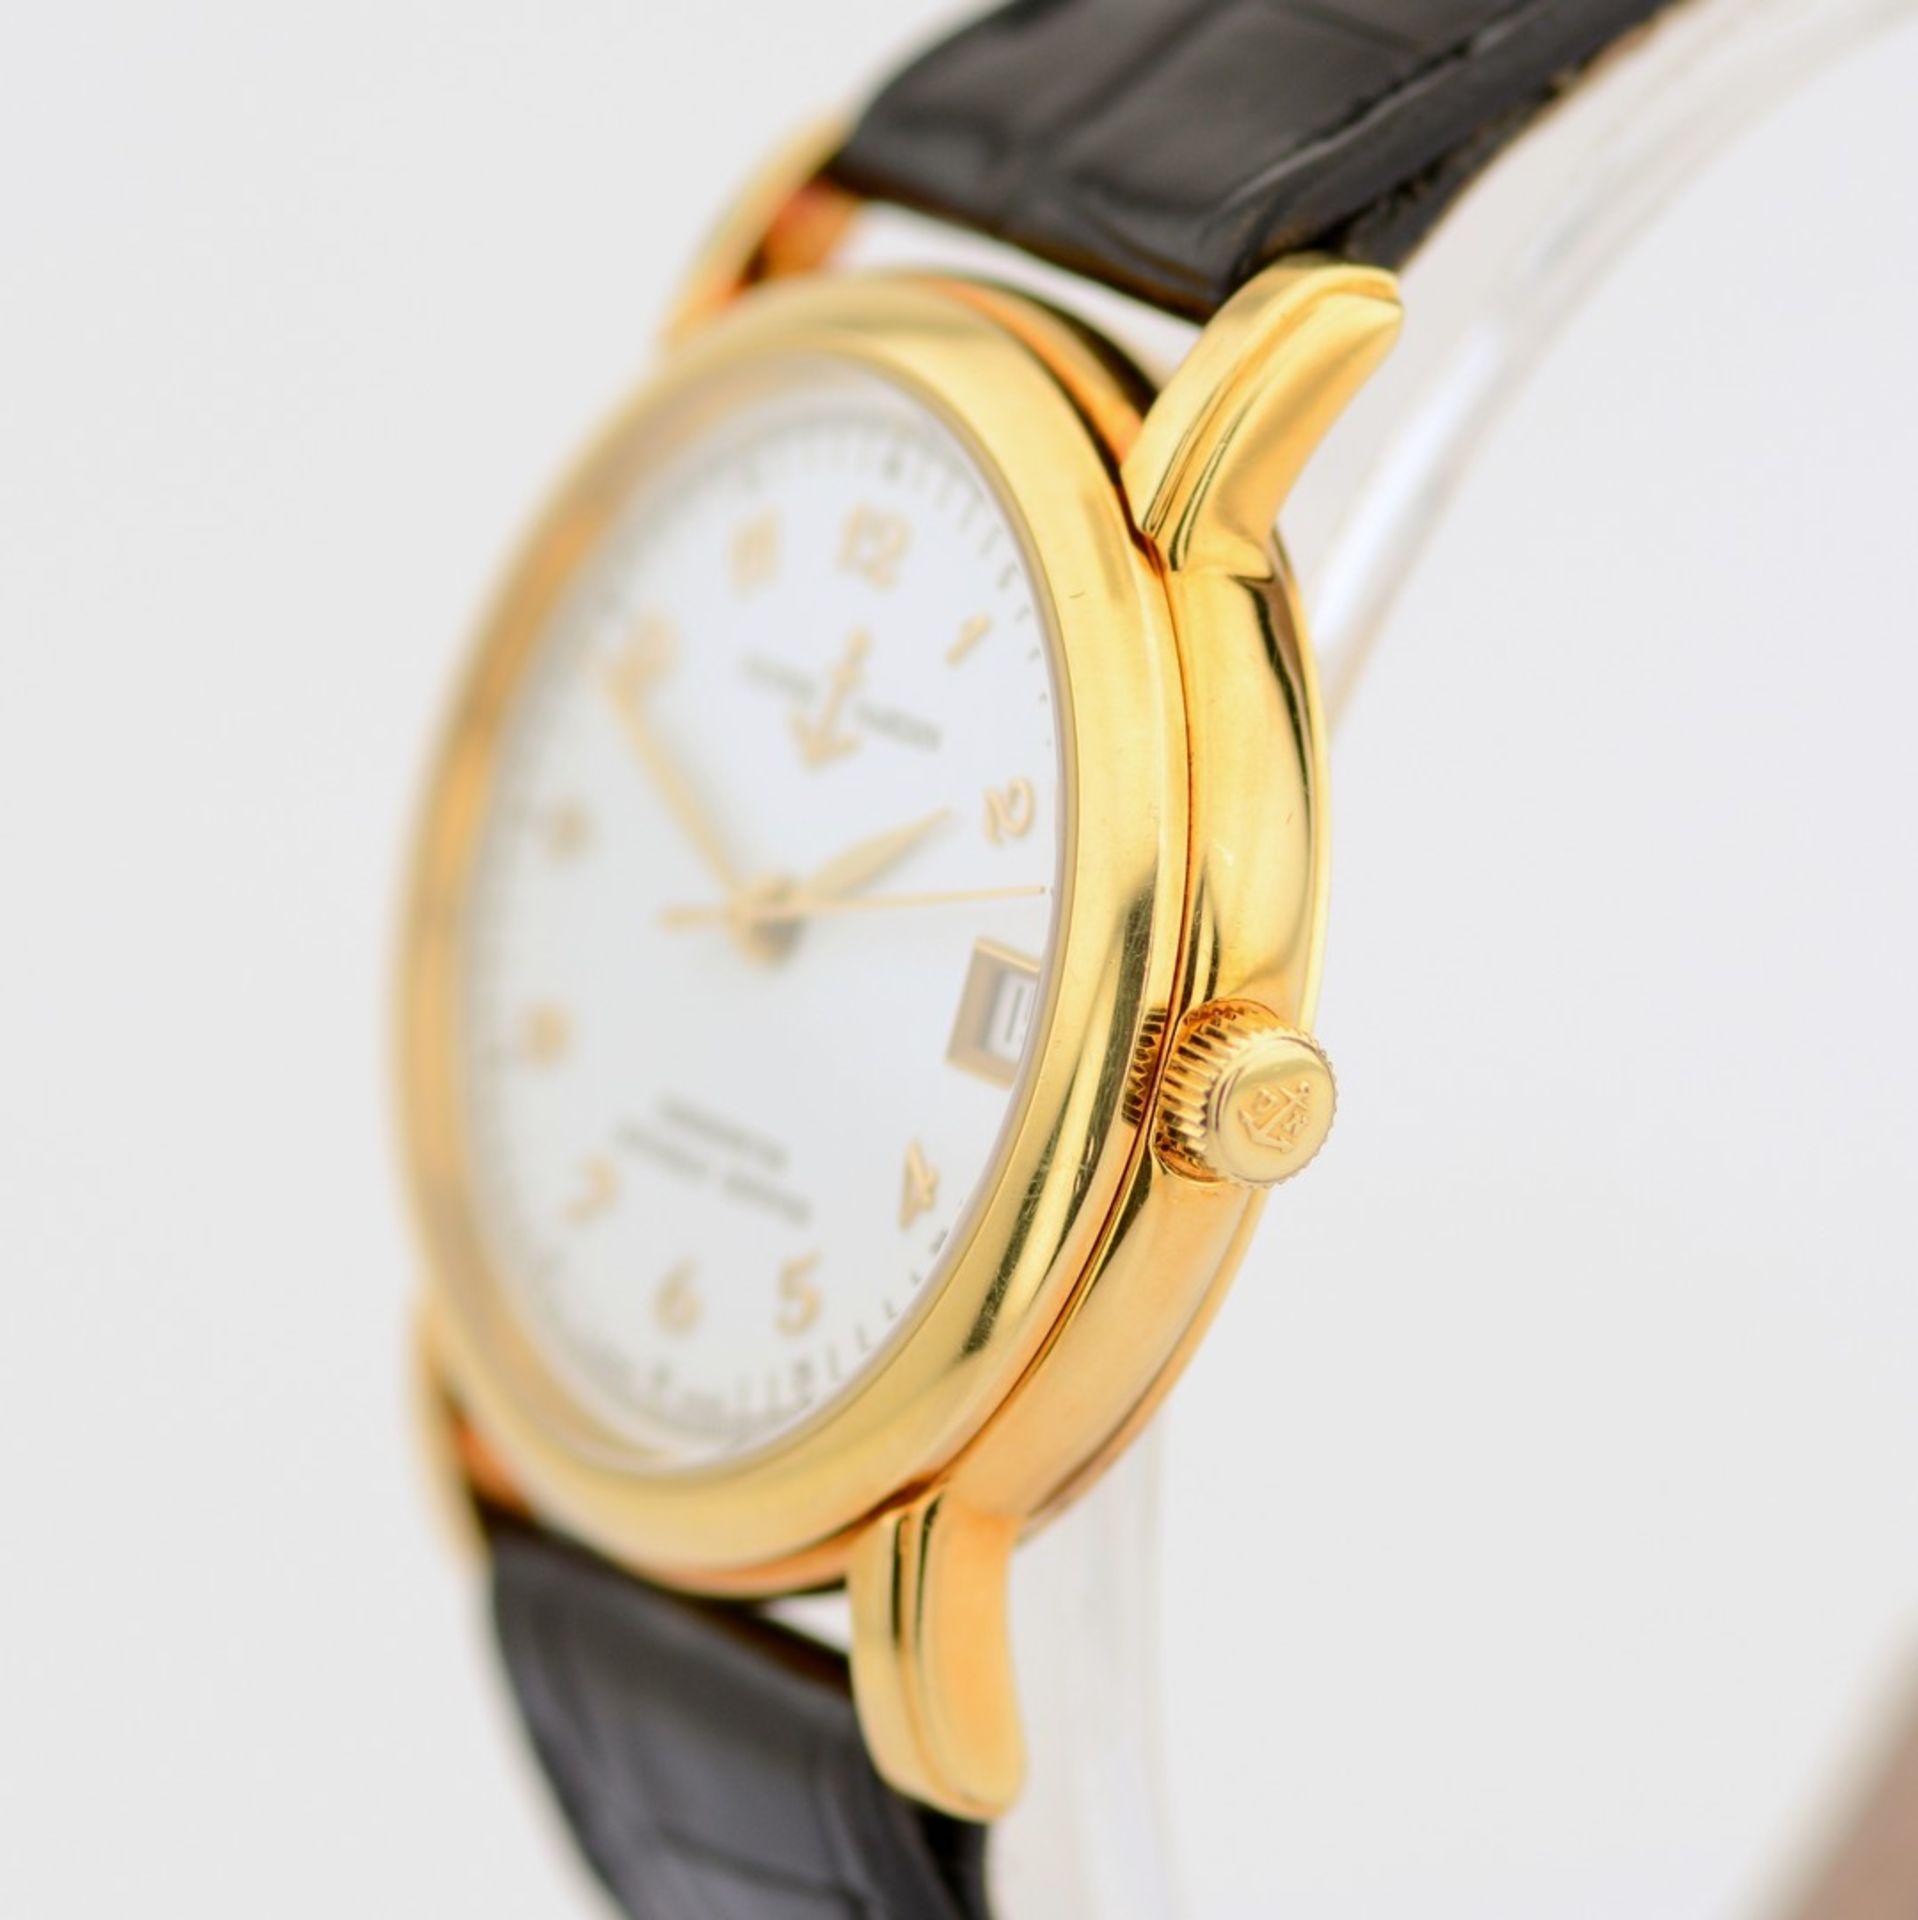 Ulysse Nardin / San Marco Auto. Chronometer 18K - Lady's Yellow Gold Wristwatch - Image 4 of 8